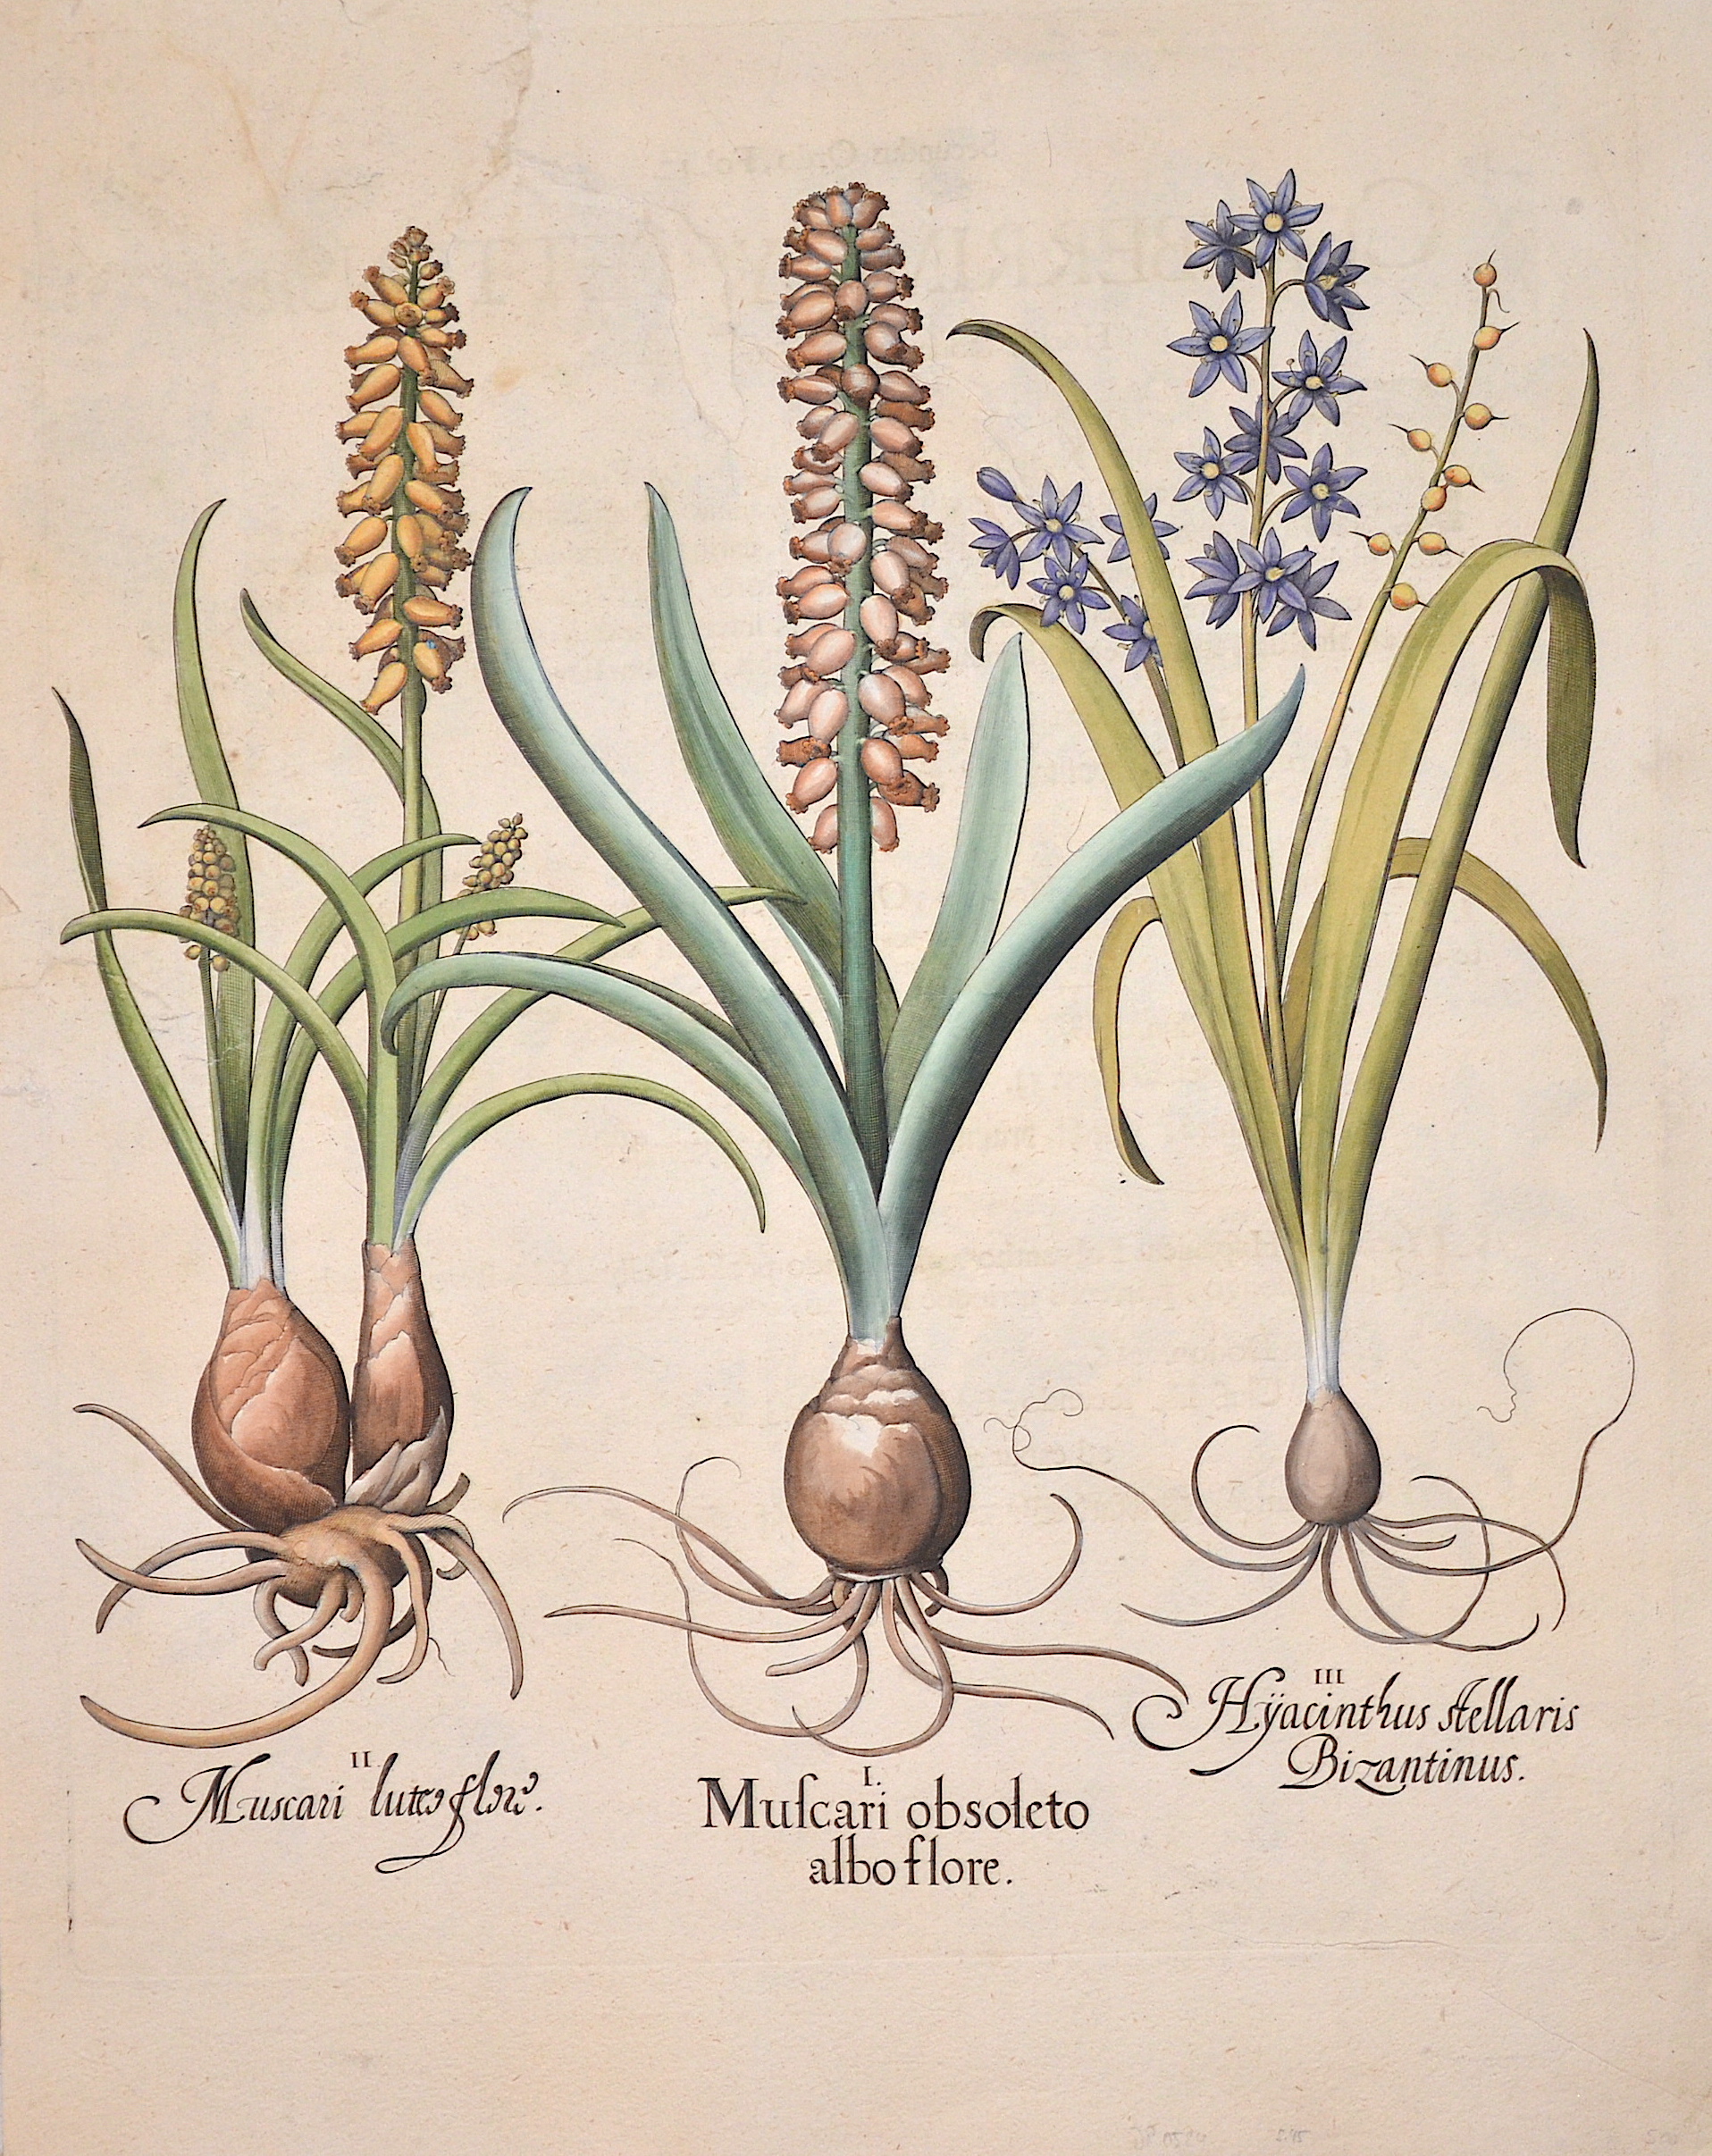 Besler Basilius Muscari obsoleto albo flore/ Muscari luteo flore/ Hyacinthus stellaris Bizantinus